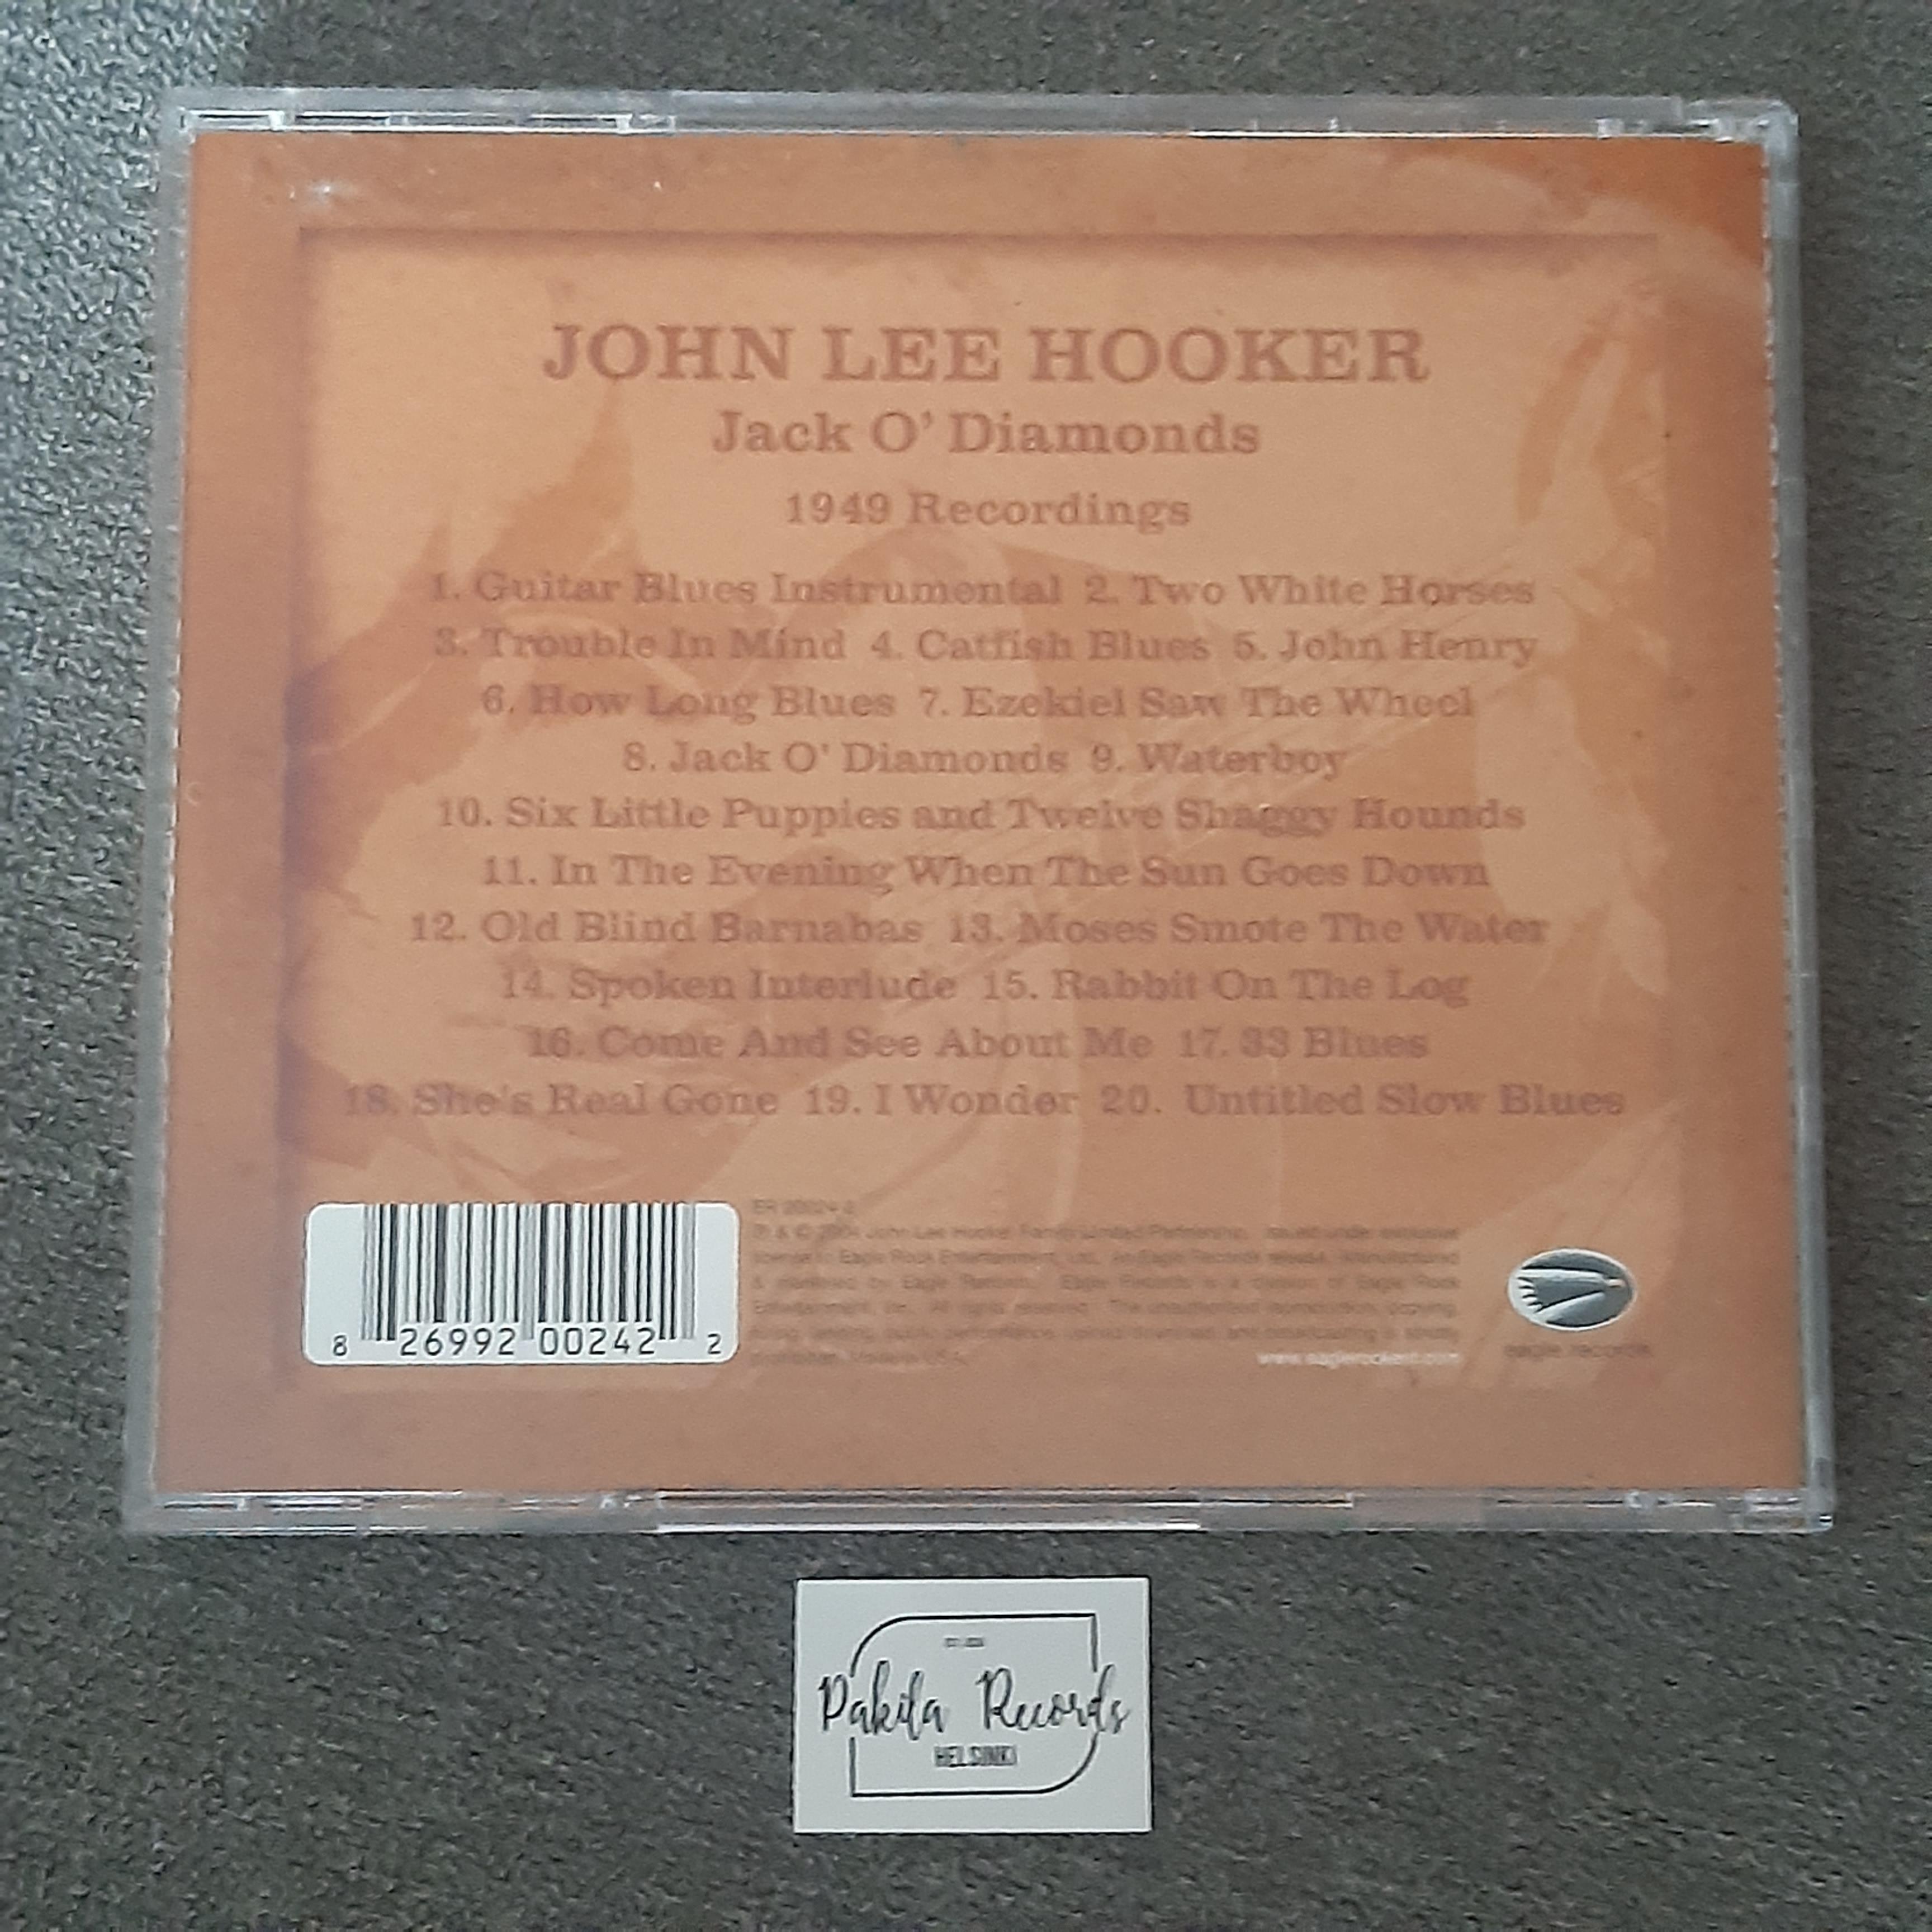 John Lee Hooker - Jack O'Diamonds, 1949 Recordings - CD (käytetty)